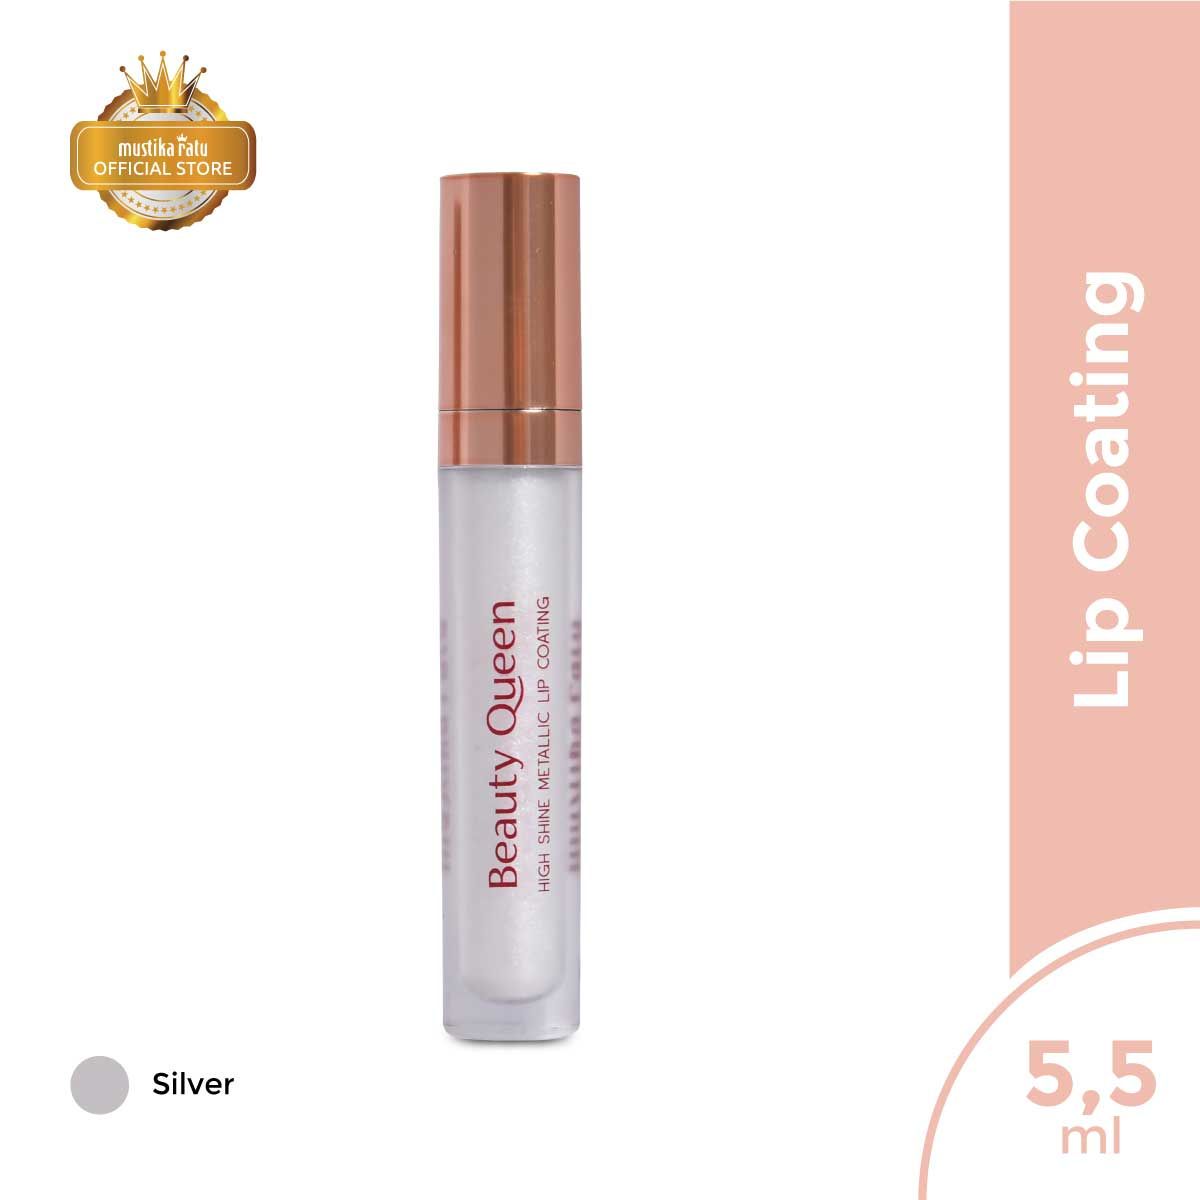 Mustika Ratu Bq High Shine Metalic Lip C.Silver 5.5ml - 1